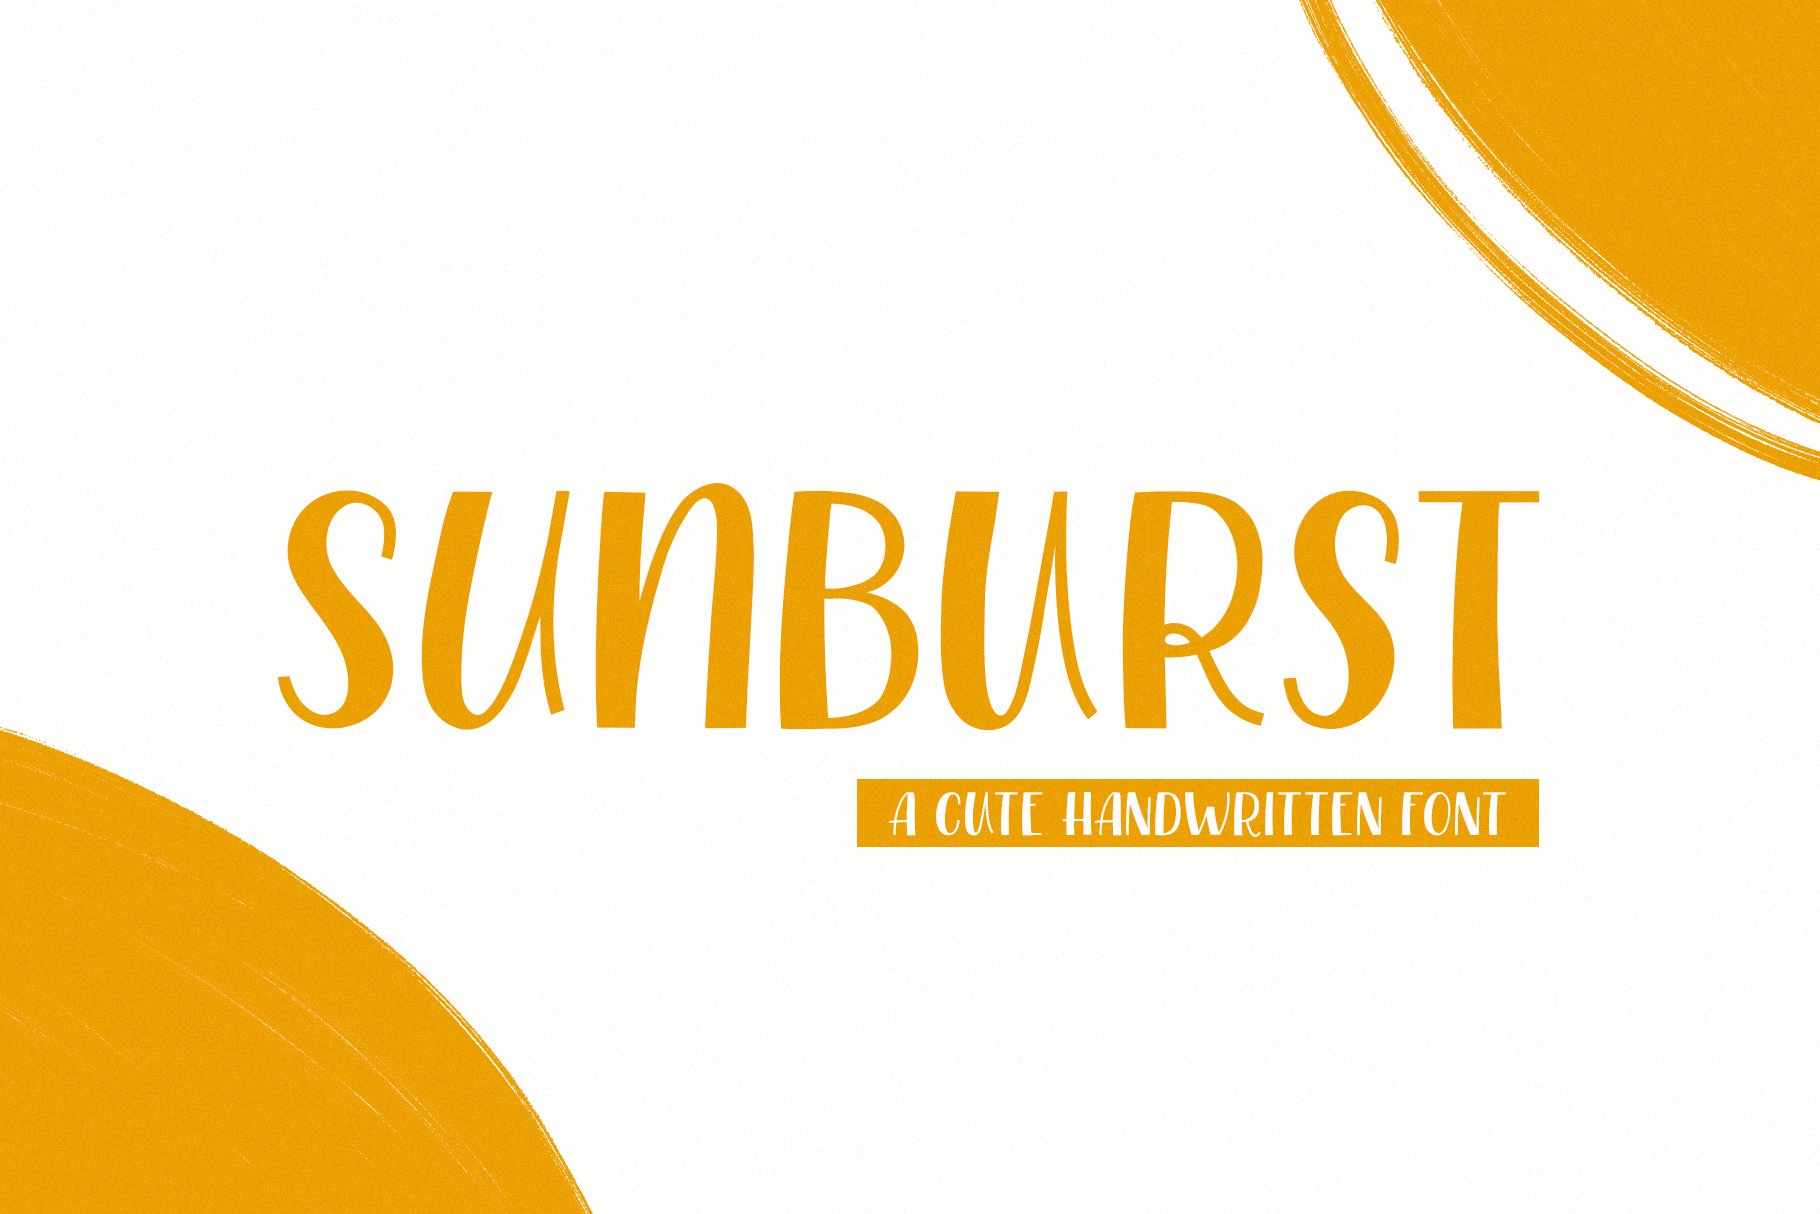 Sunburst - a cute handwritten font cover image.